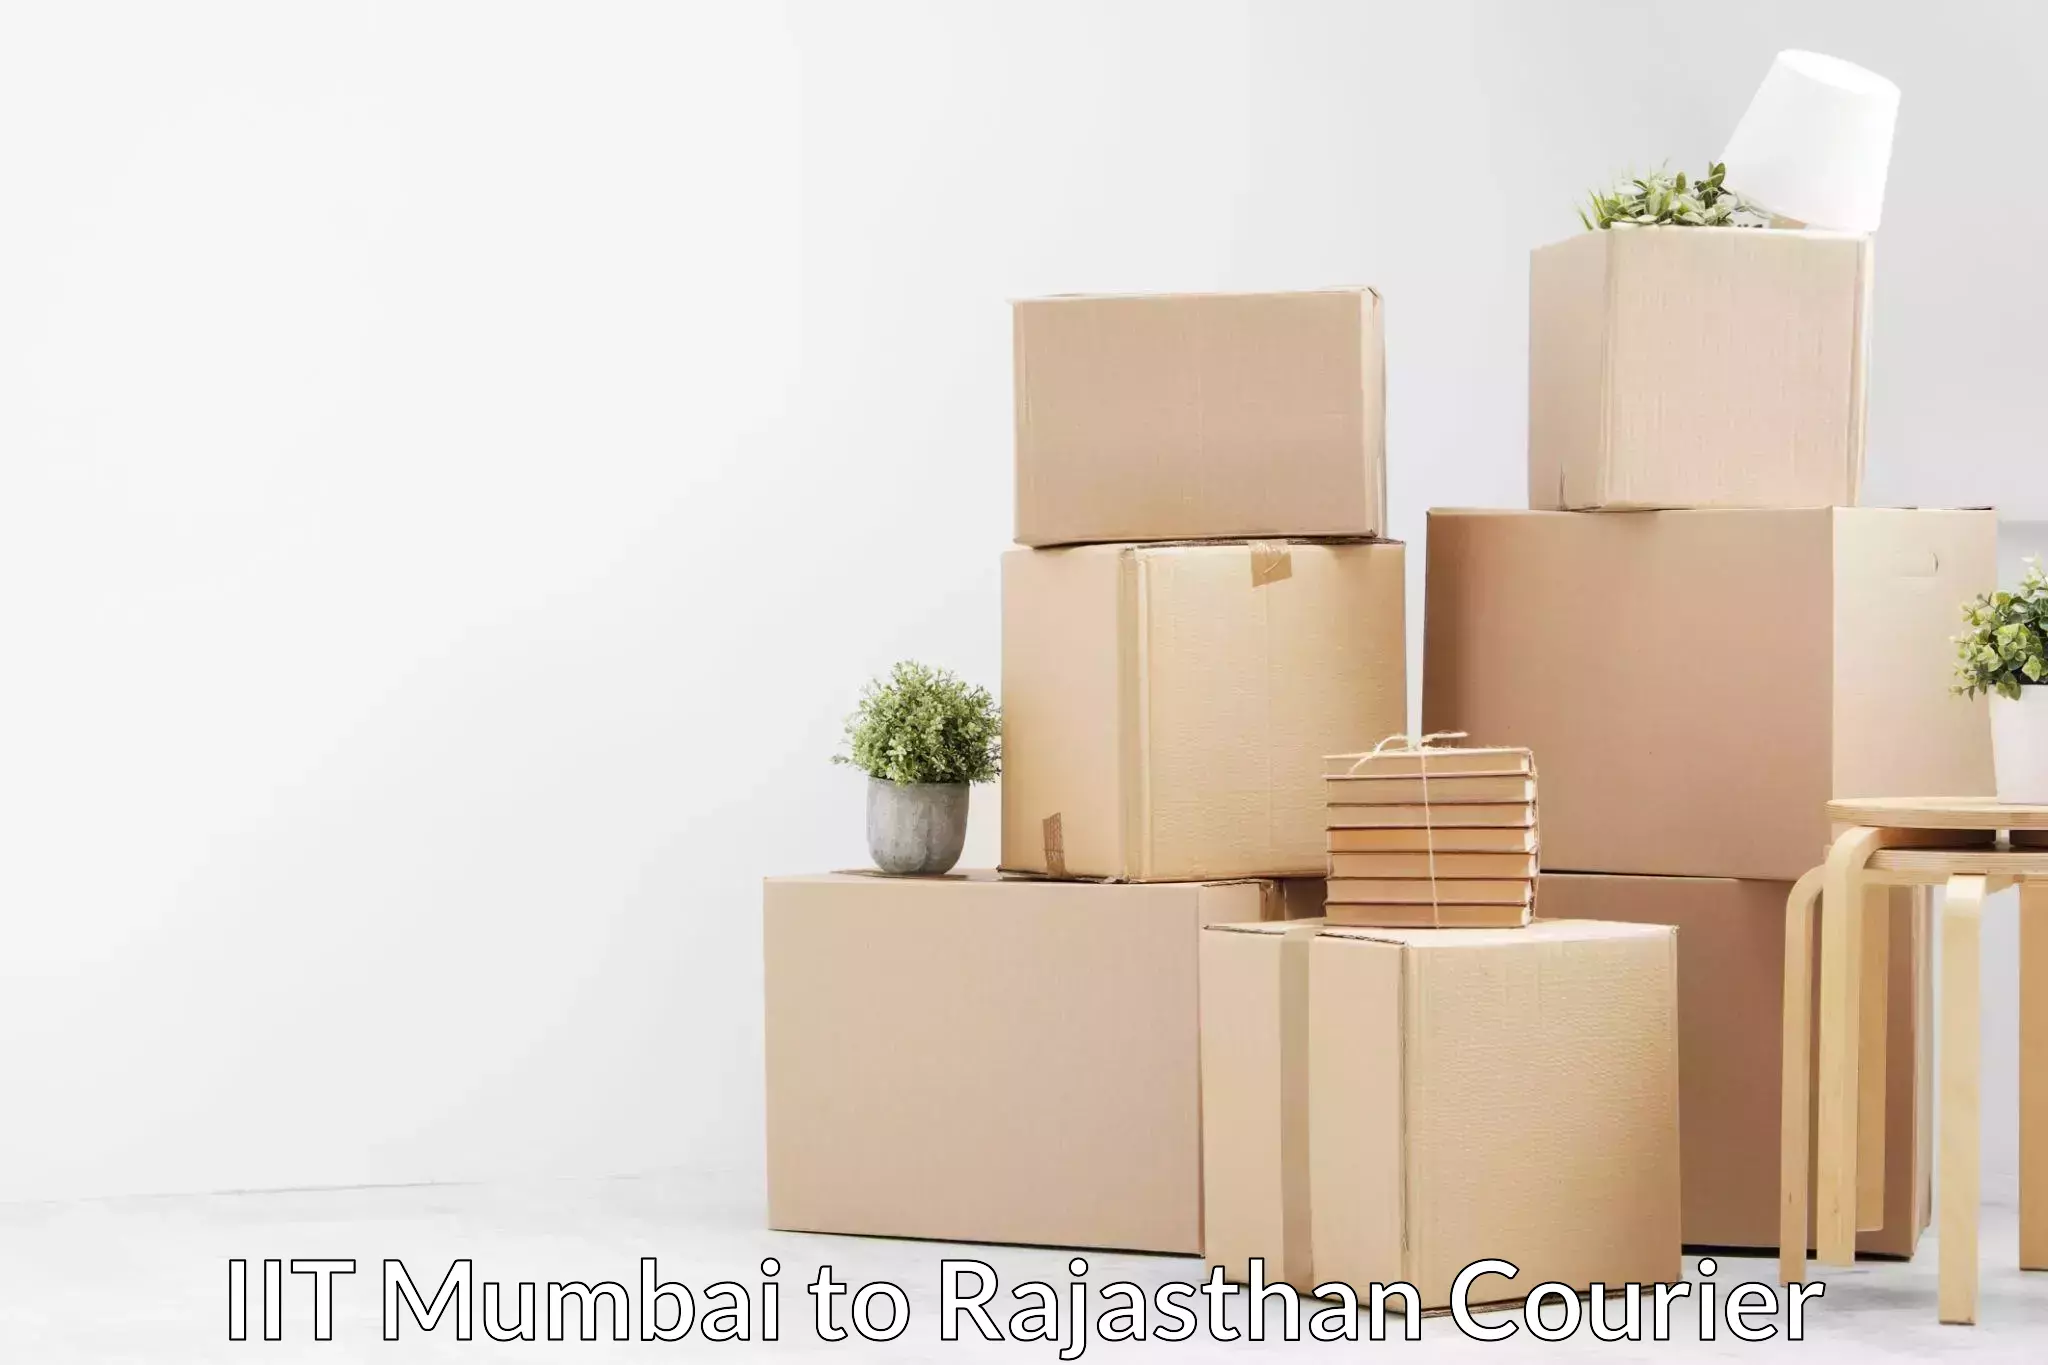 Quality moving and storage IIT Mumbai to Rajasthan